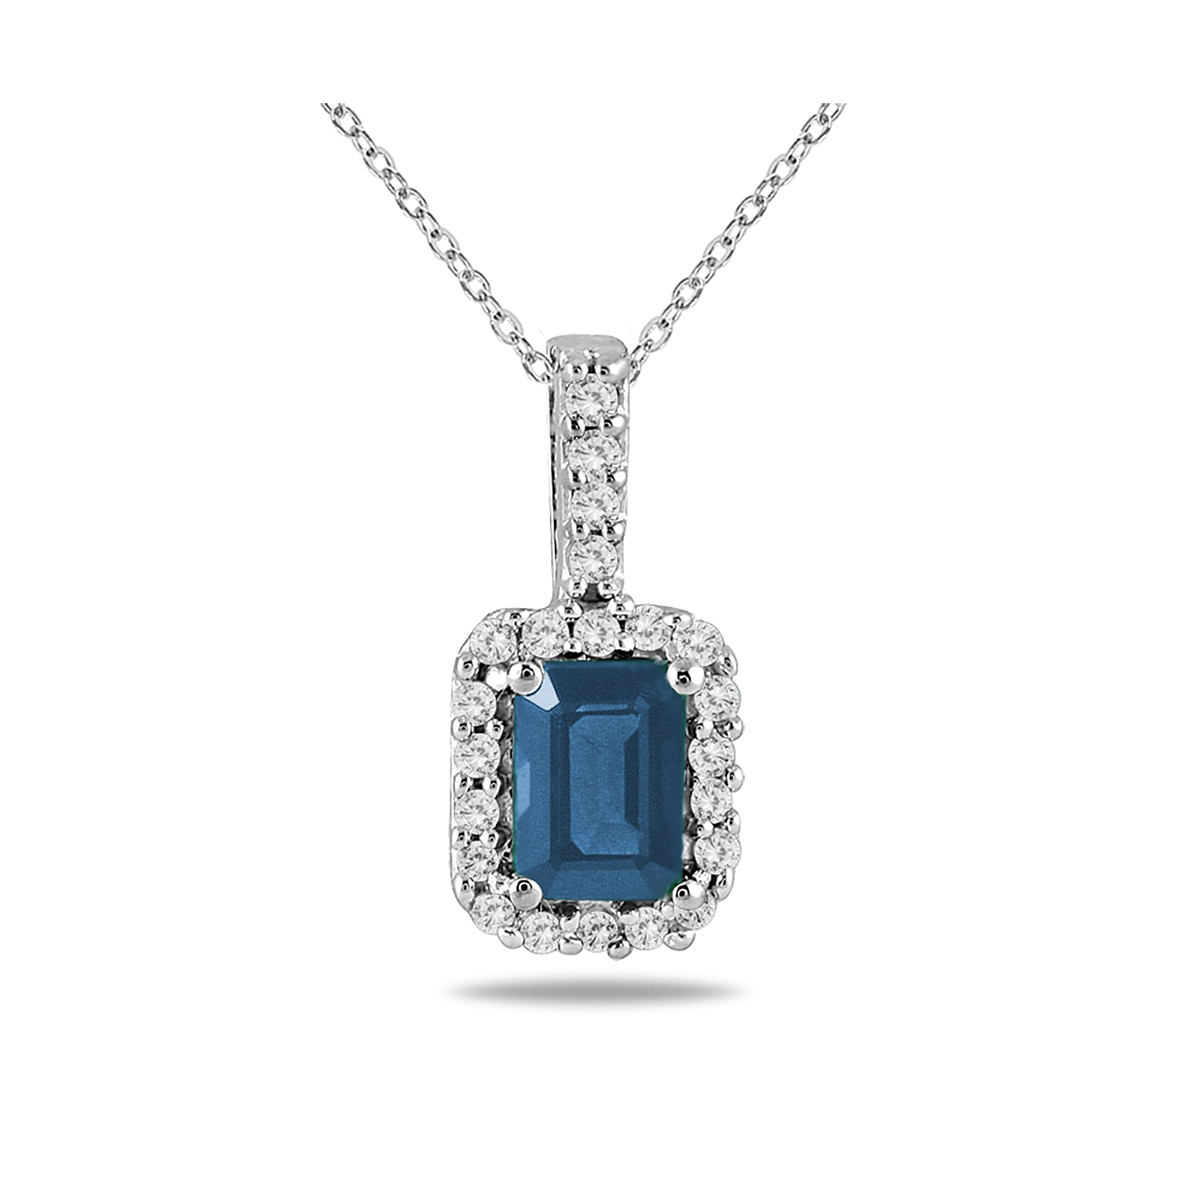 1/10 Carat Diamond and Sapphire Pendant in 10K White Gold